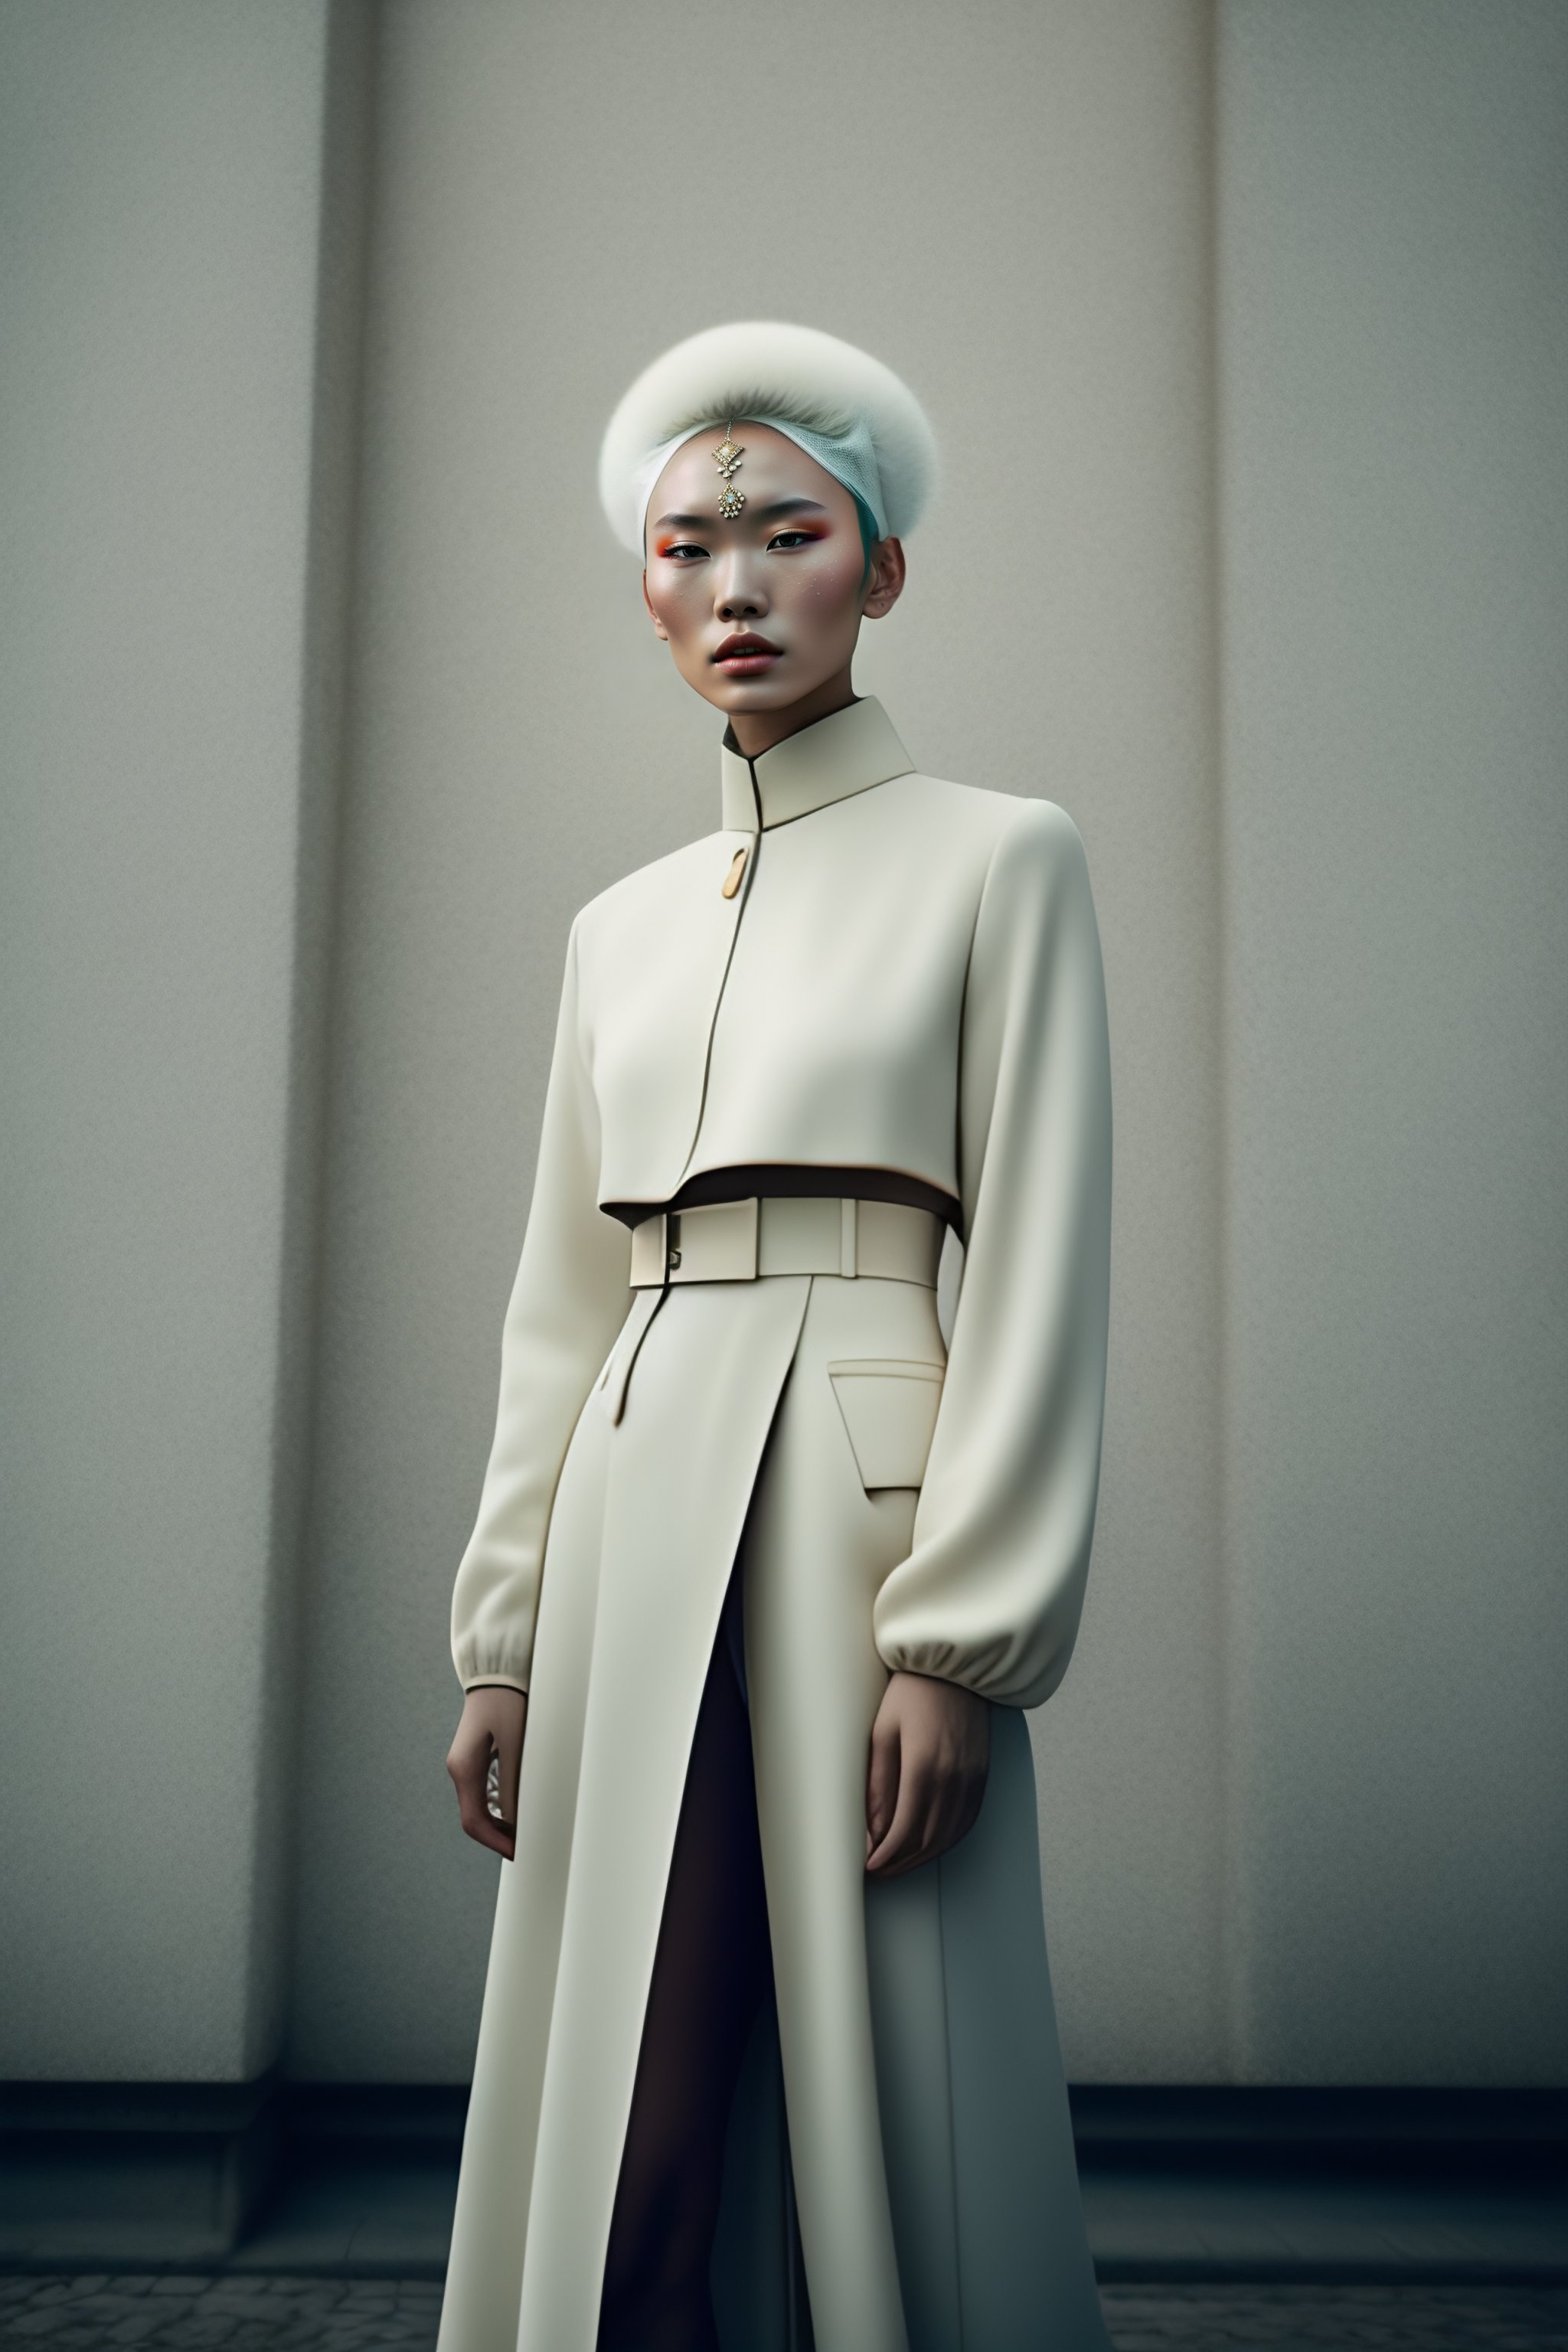 Lexica - Almaty girl, kazakh, Portrait of haute couture beautiful ...